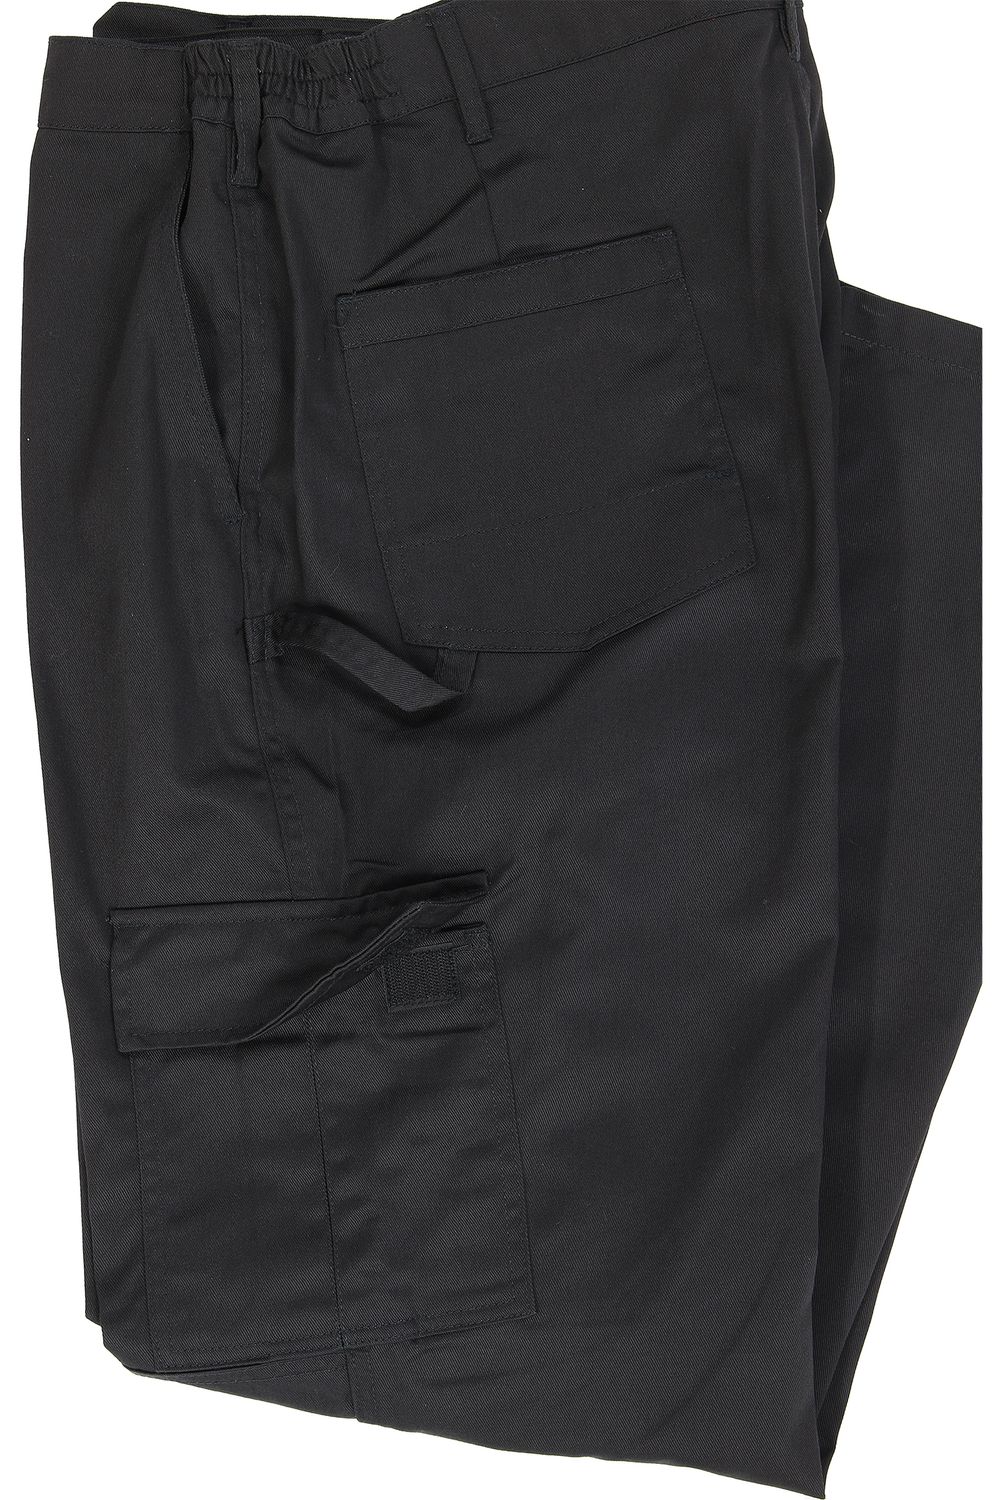 Working trousers model Praktika in black by PKA Klöcker in large sizes 58-74